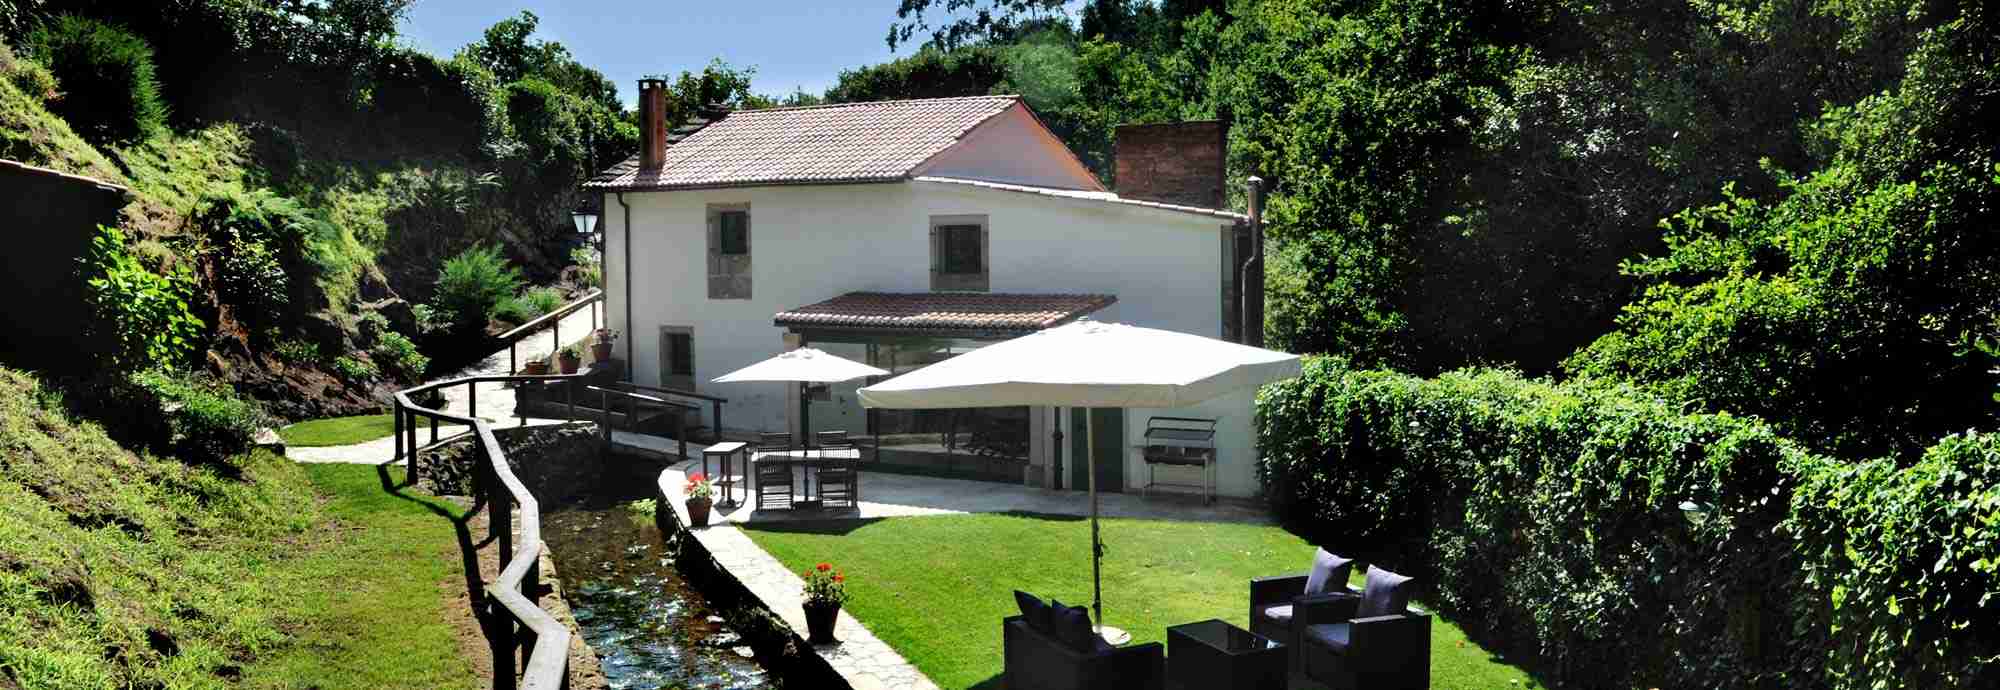 Millhouse garden villa with pool in Santiago de Compostela, Galicia